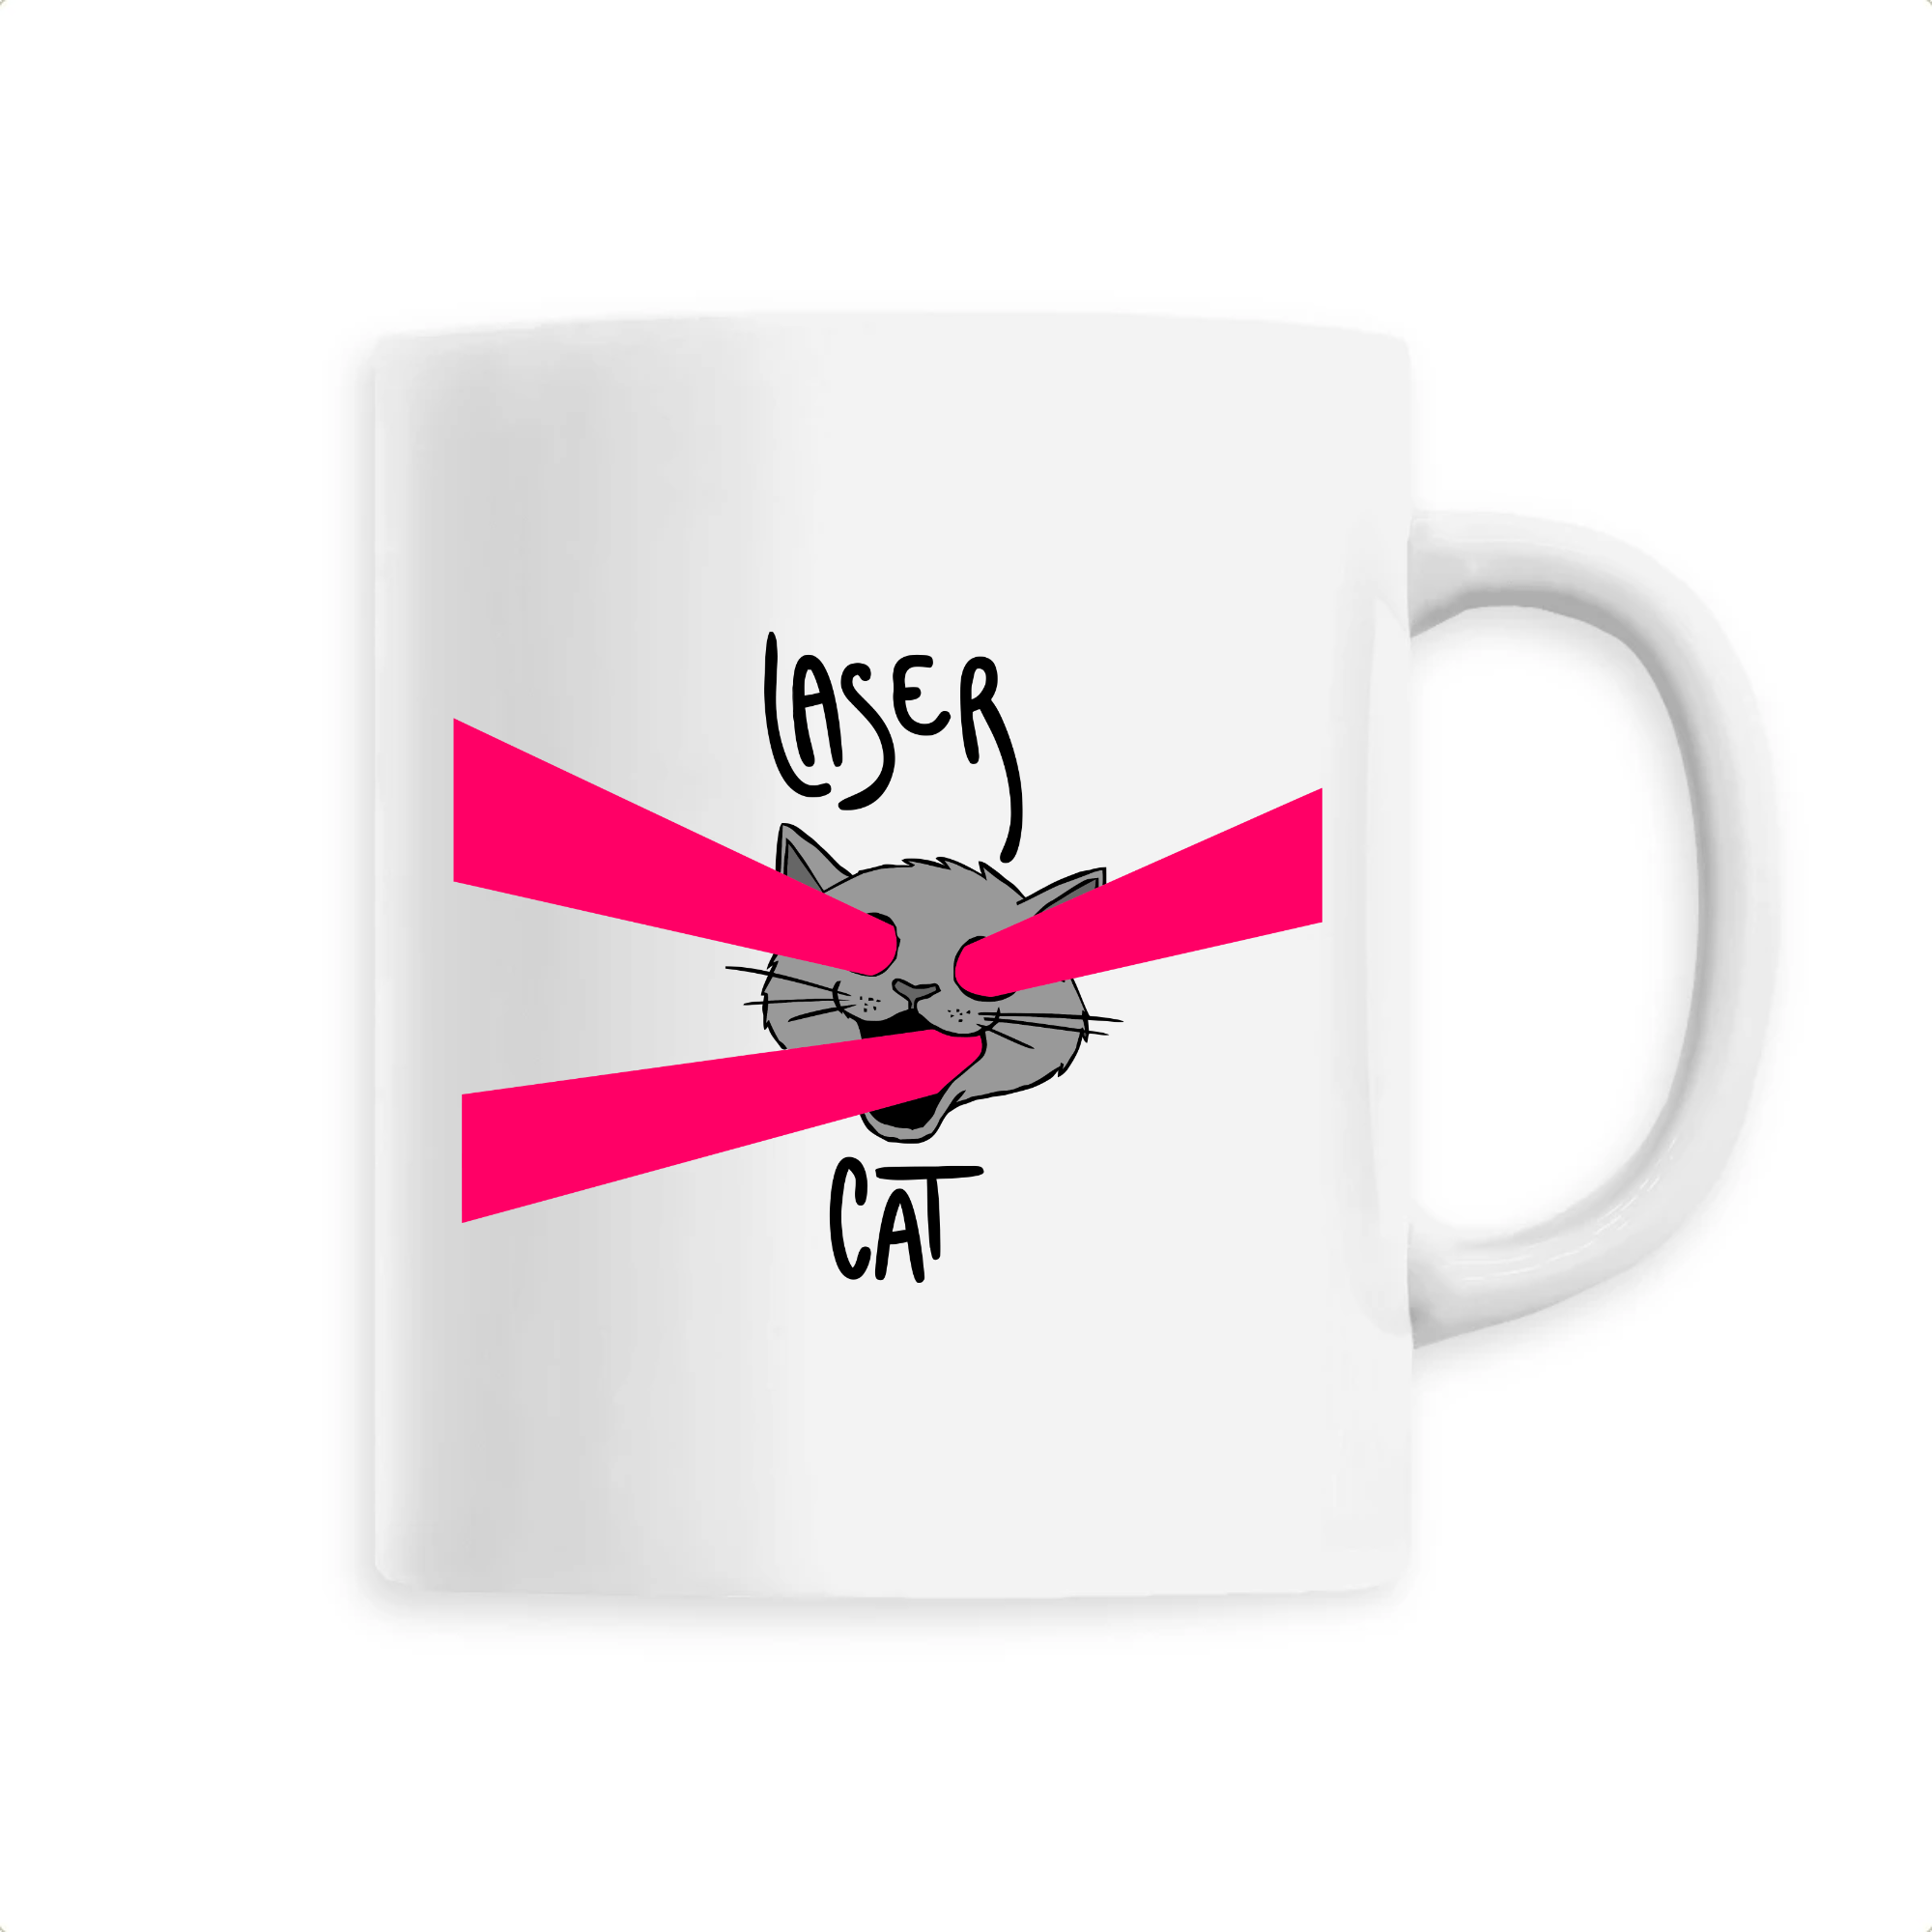 mug chat laser